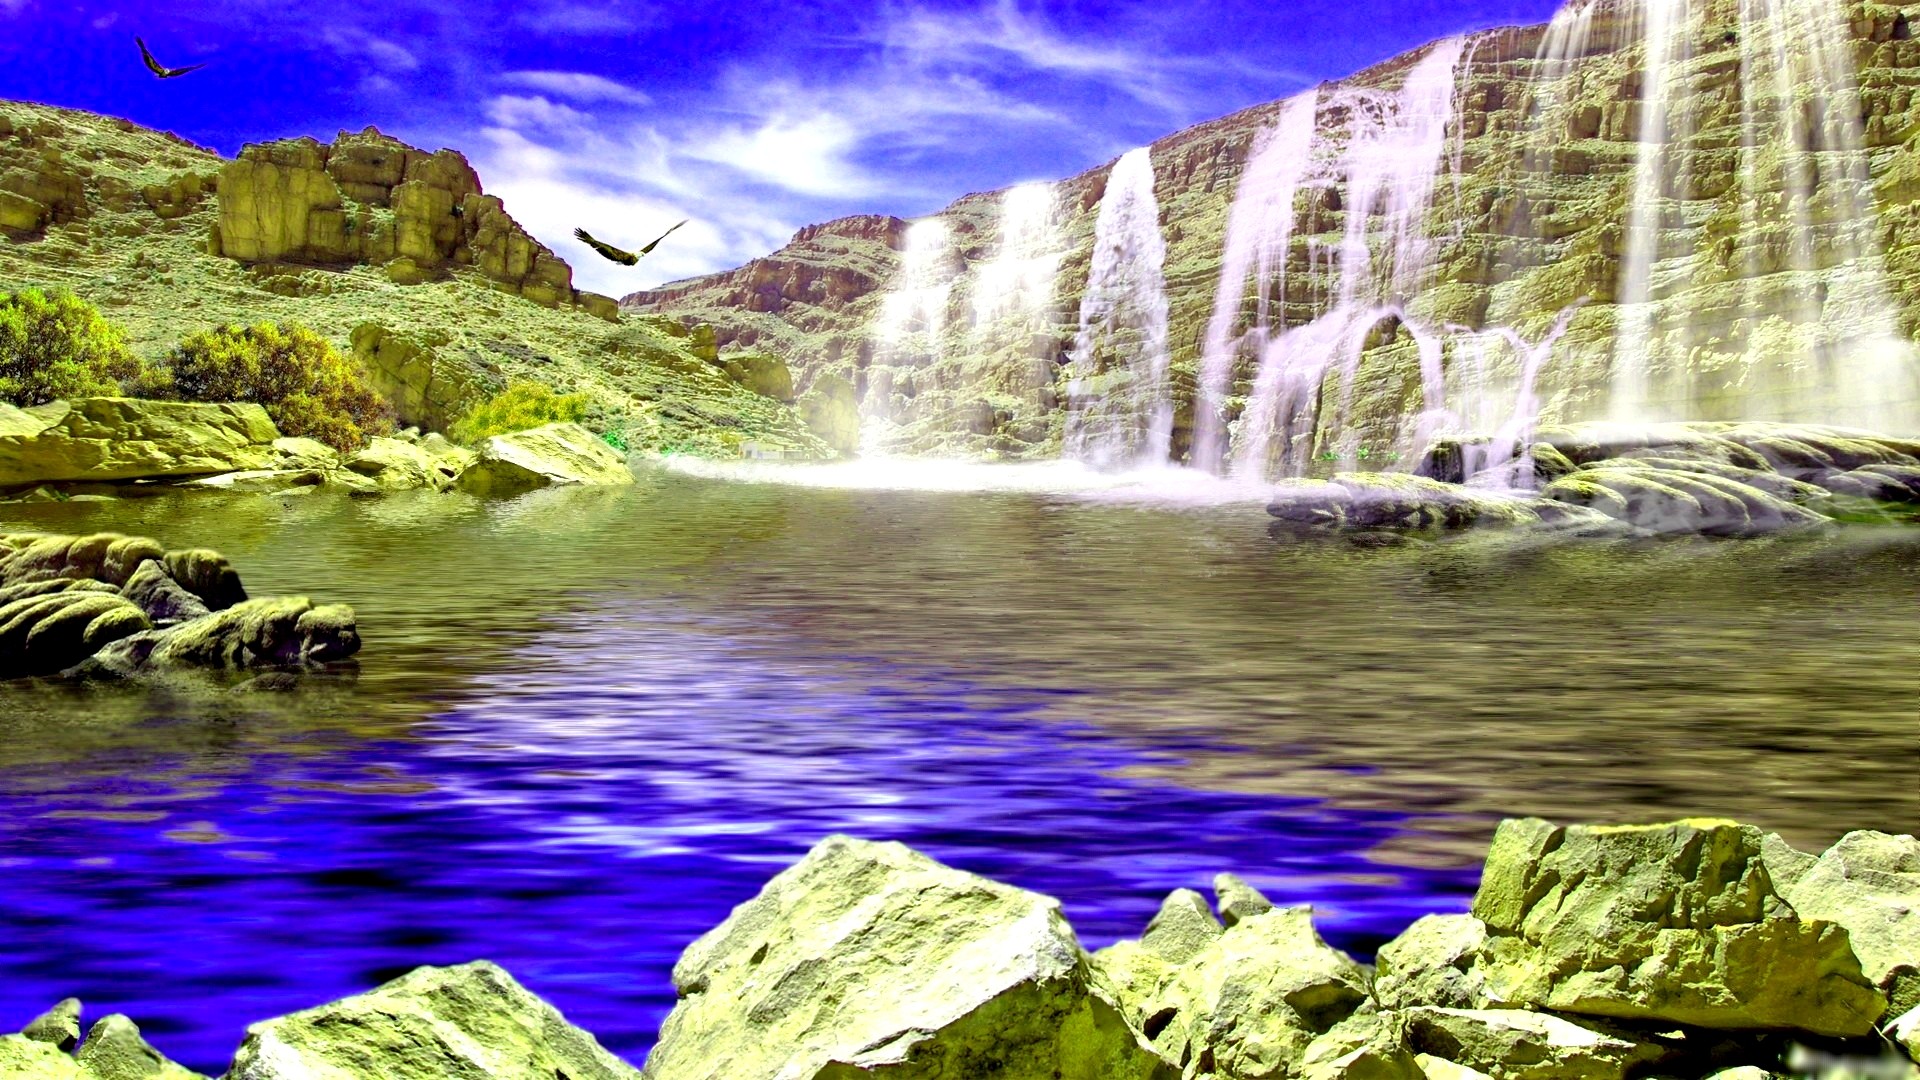 Waterfall Hd Nature Wallpaper Full Screen : Snag one of unsplash's